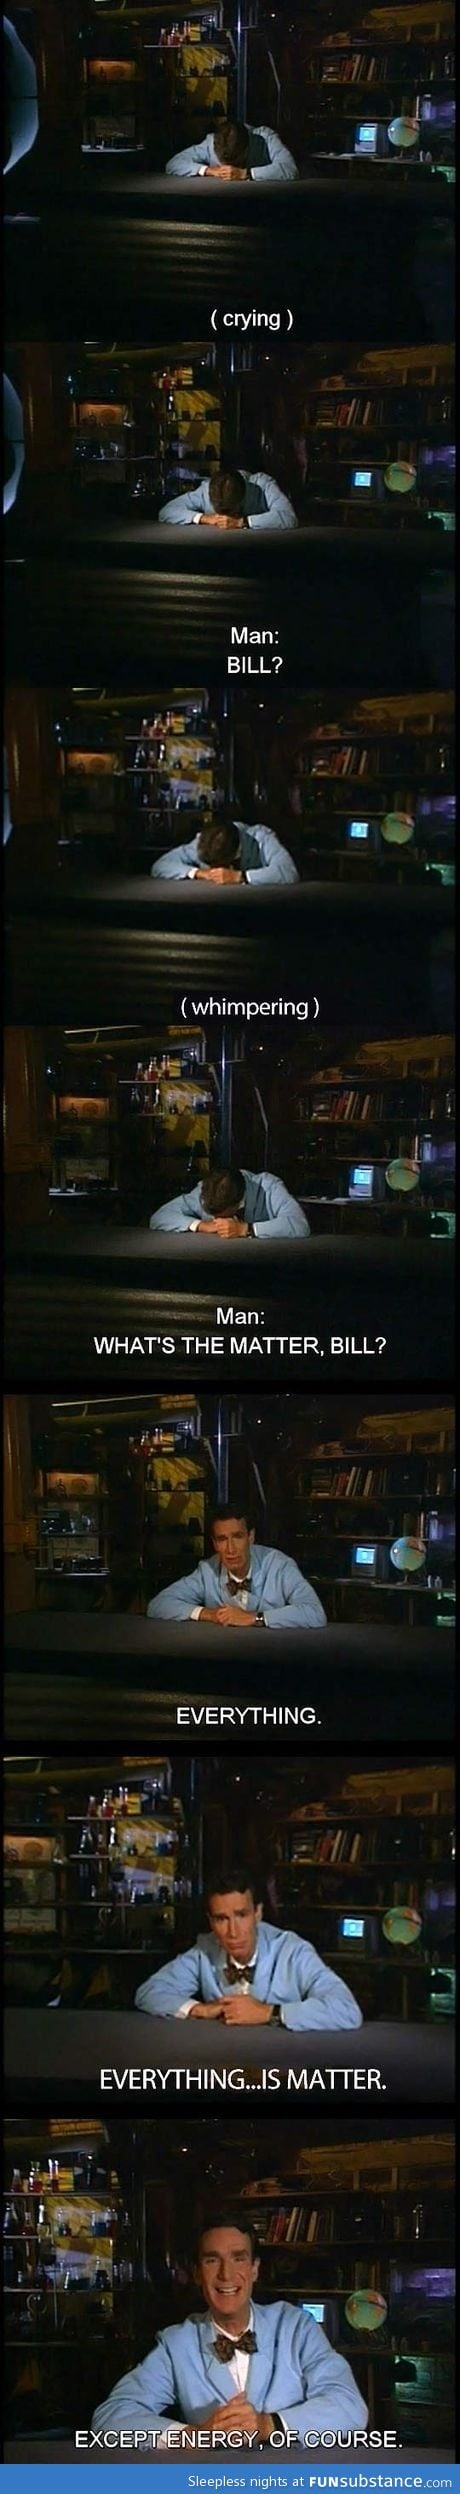 What's the matter Bill?